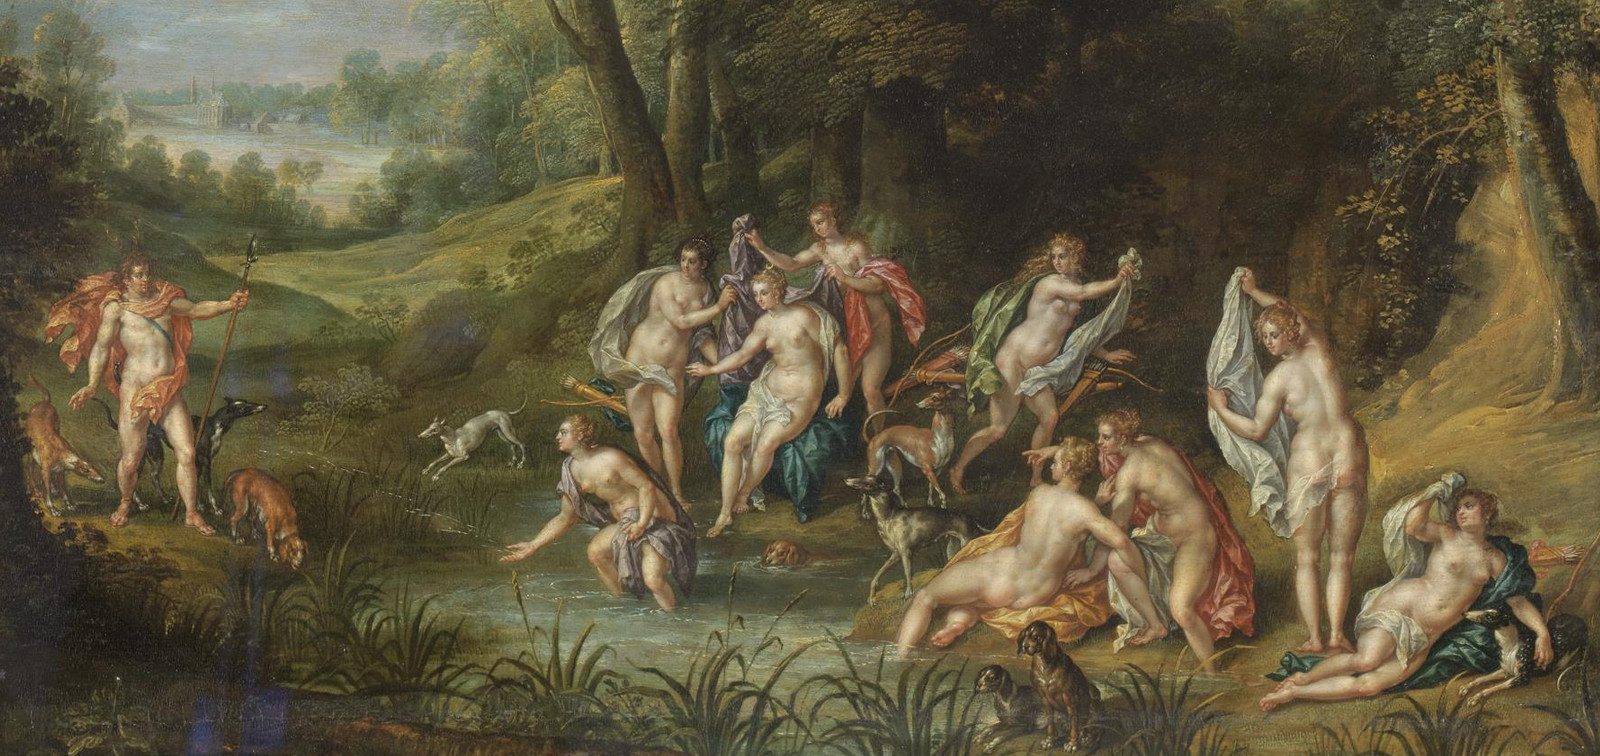 Splendor, Myth and Vision: Nudes from the Prado